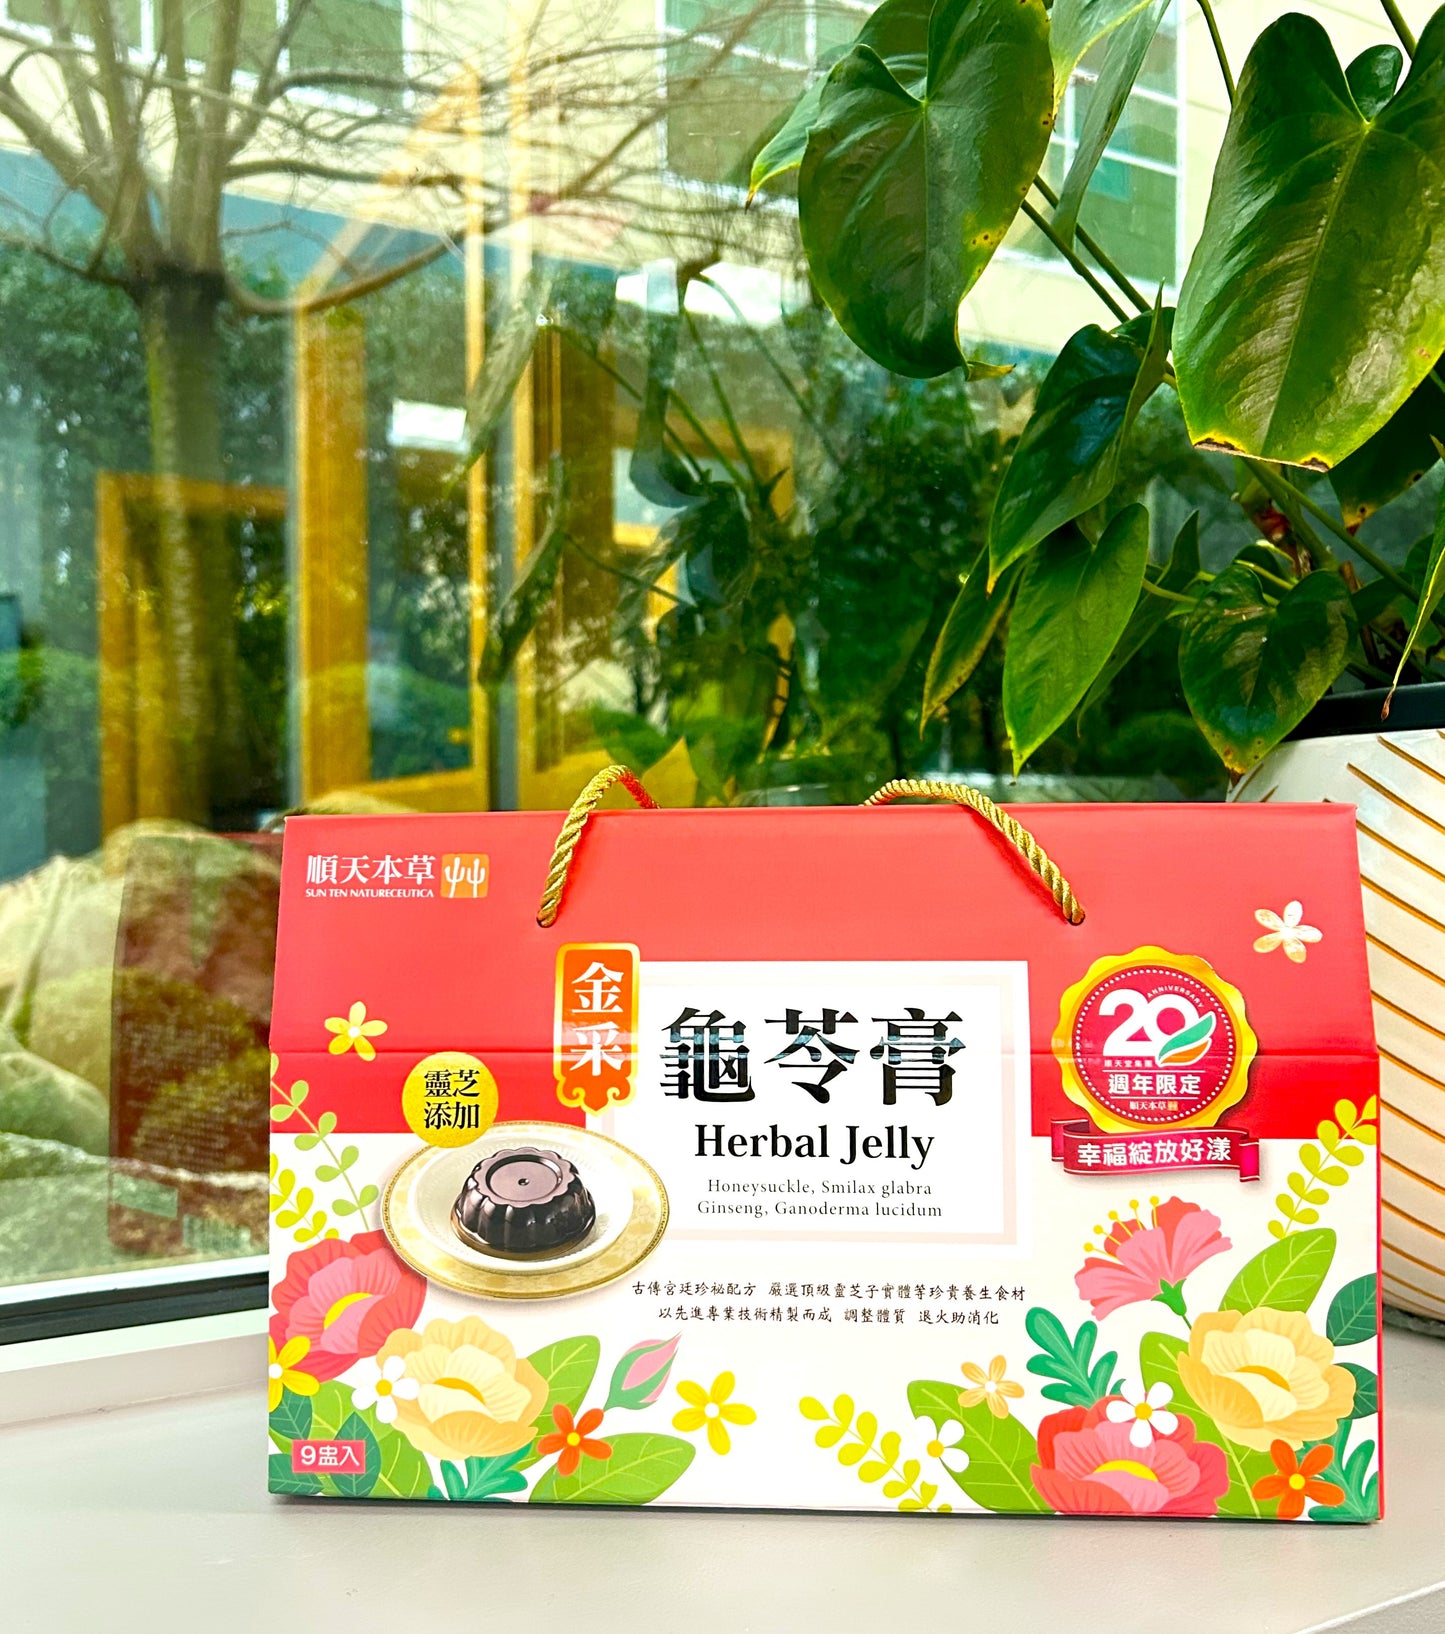 SunTen Reishi Herbal Jelly Gift Box 順天本草 金采龜苓膏禮盒